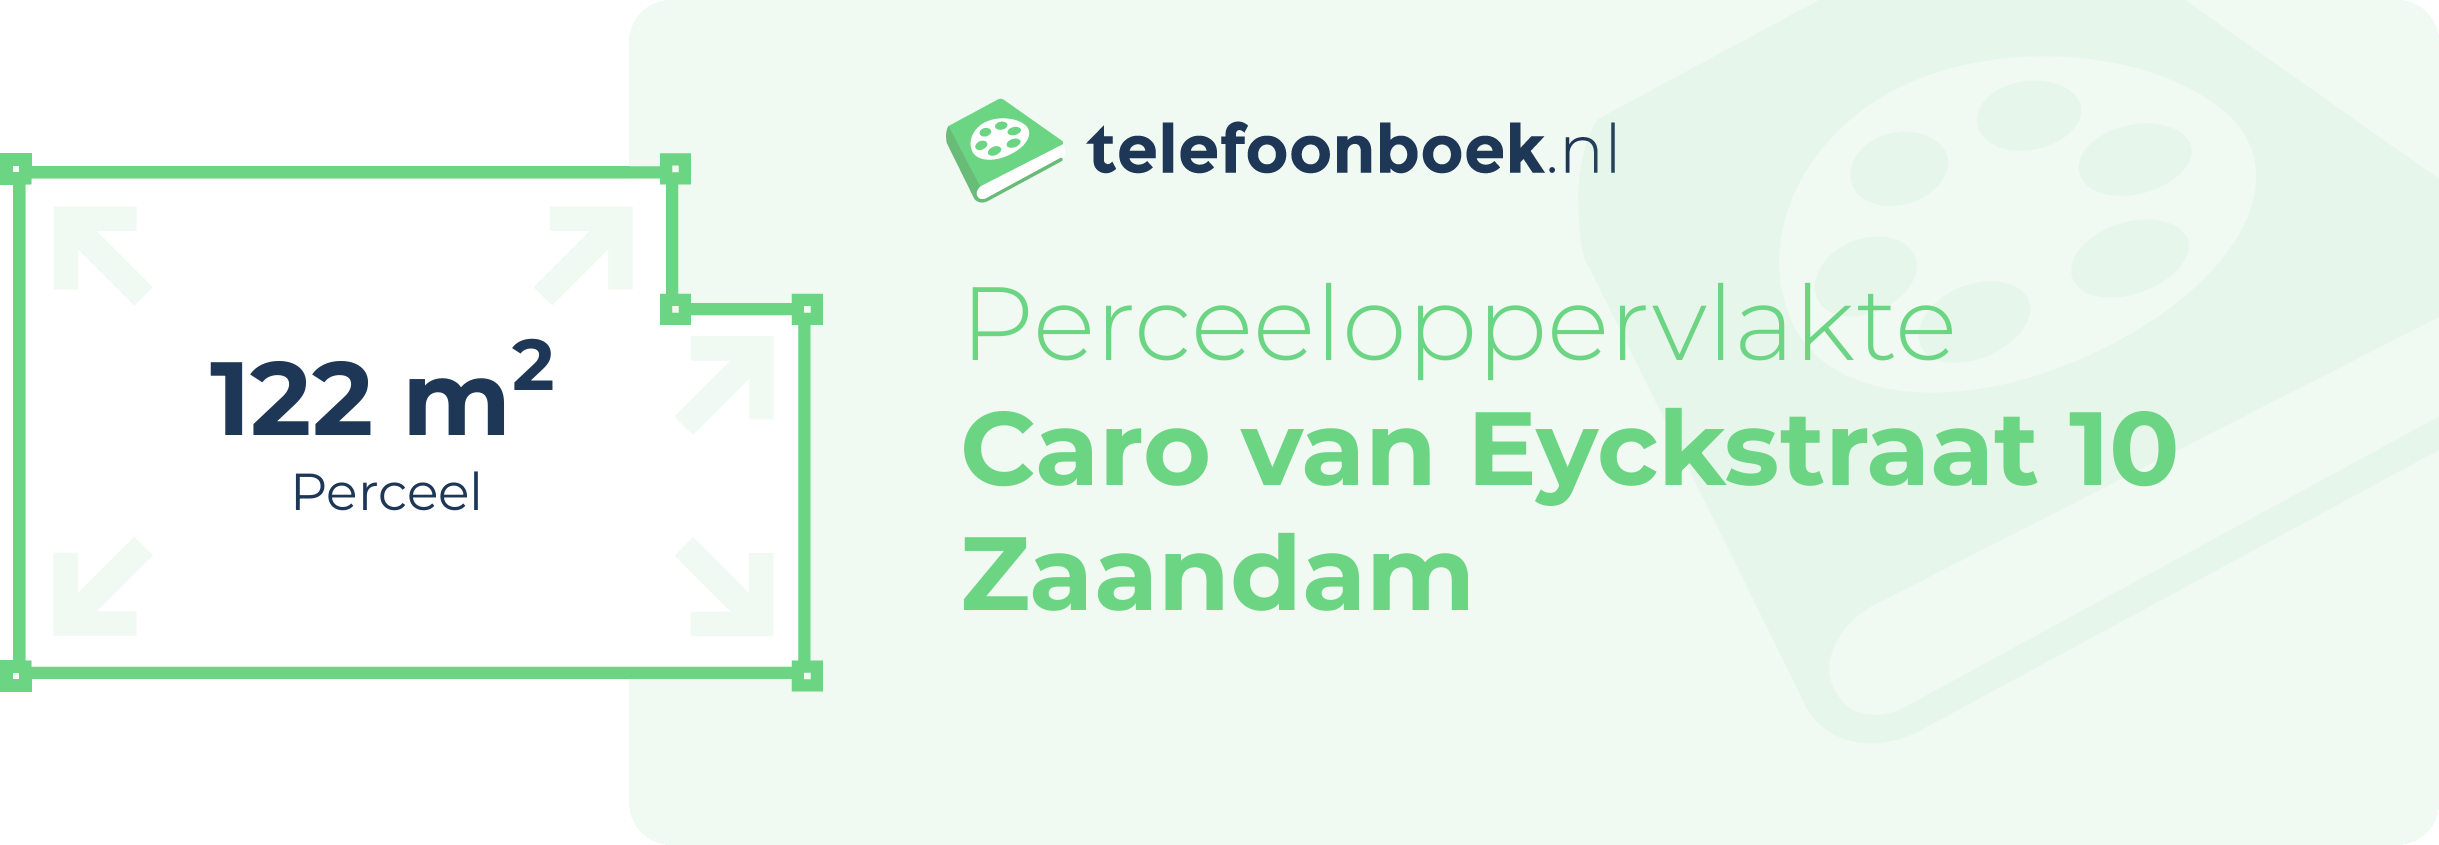 Perceeloppervlakte Caro Van Eyckstraat 10 Zaandam